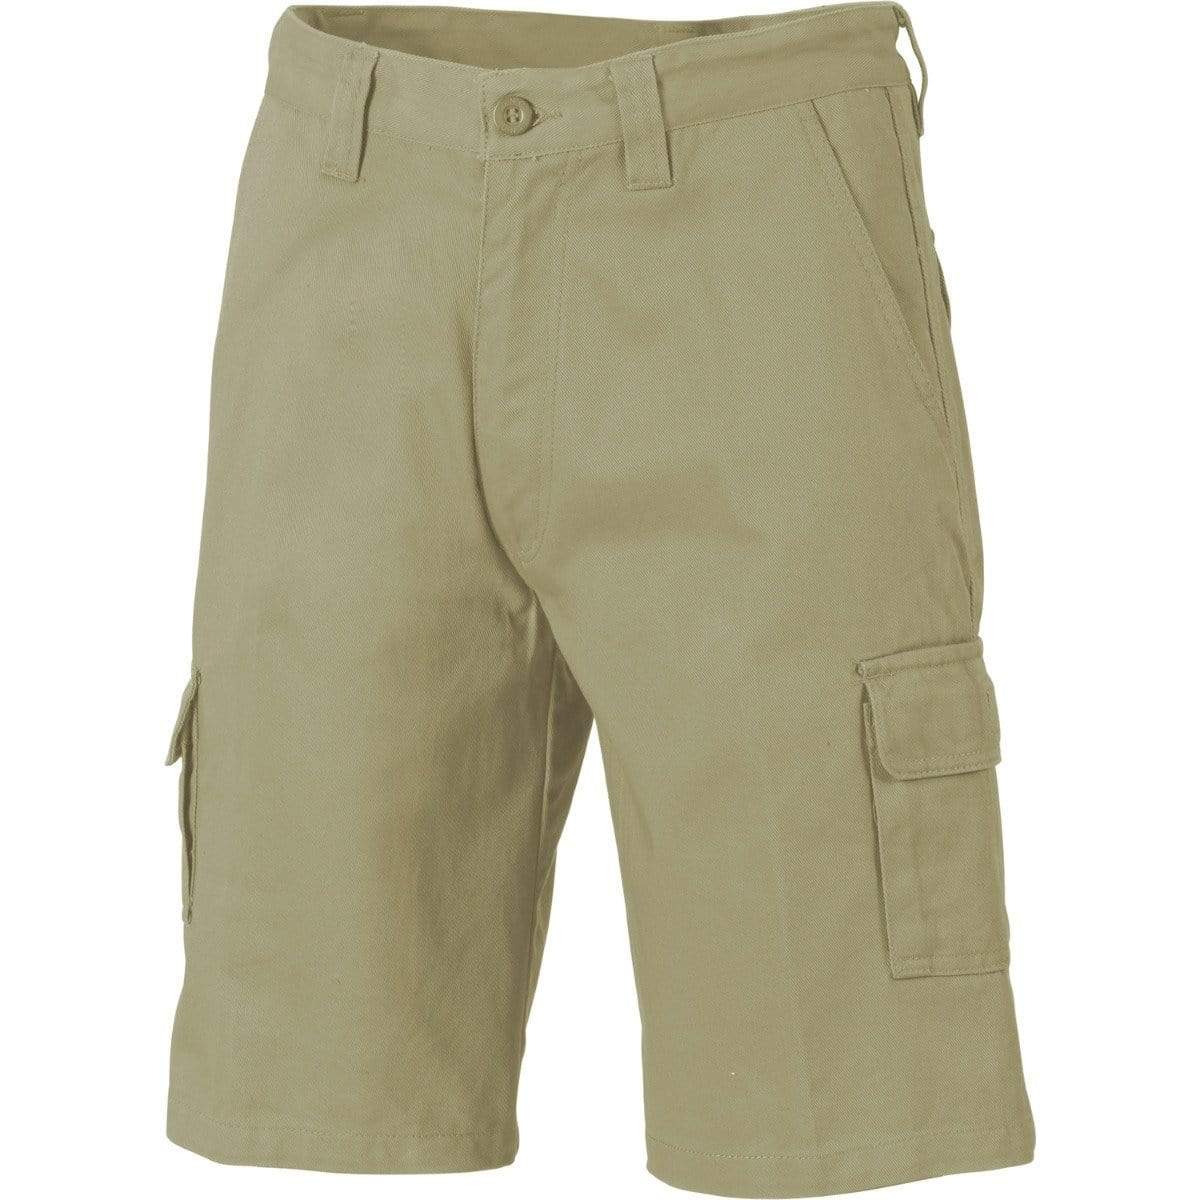 Dnc Workwear Cotton Drill Cargo Shorts - 3302 Work Wear DNC Workwear Khaki 72R 